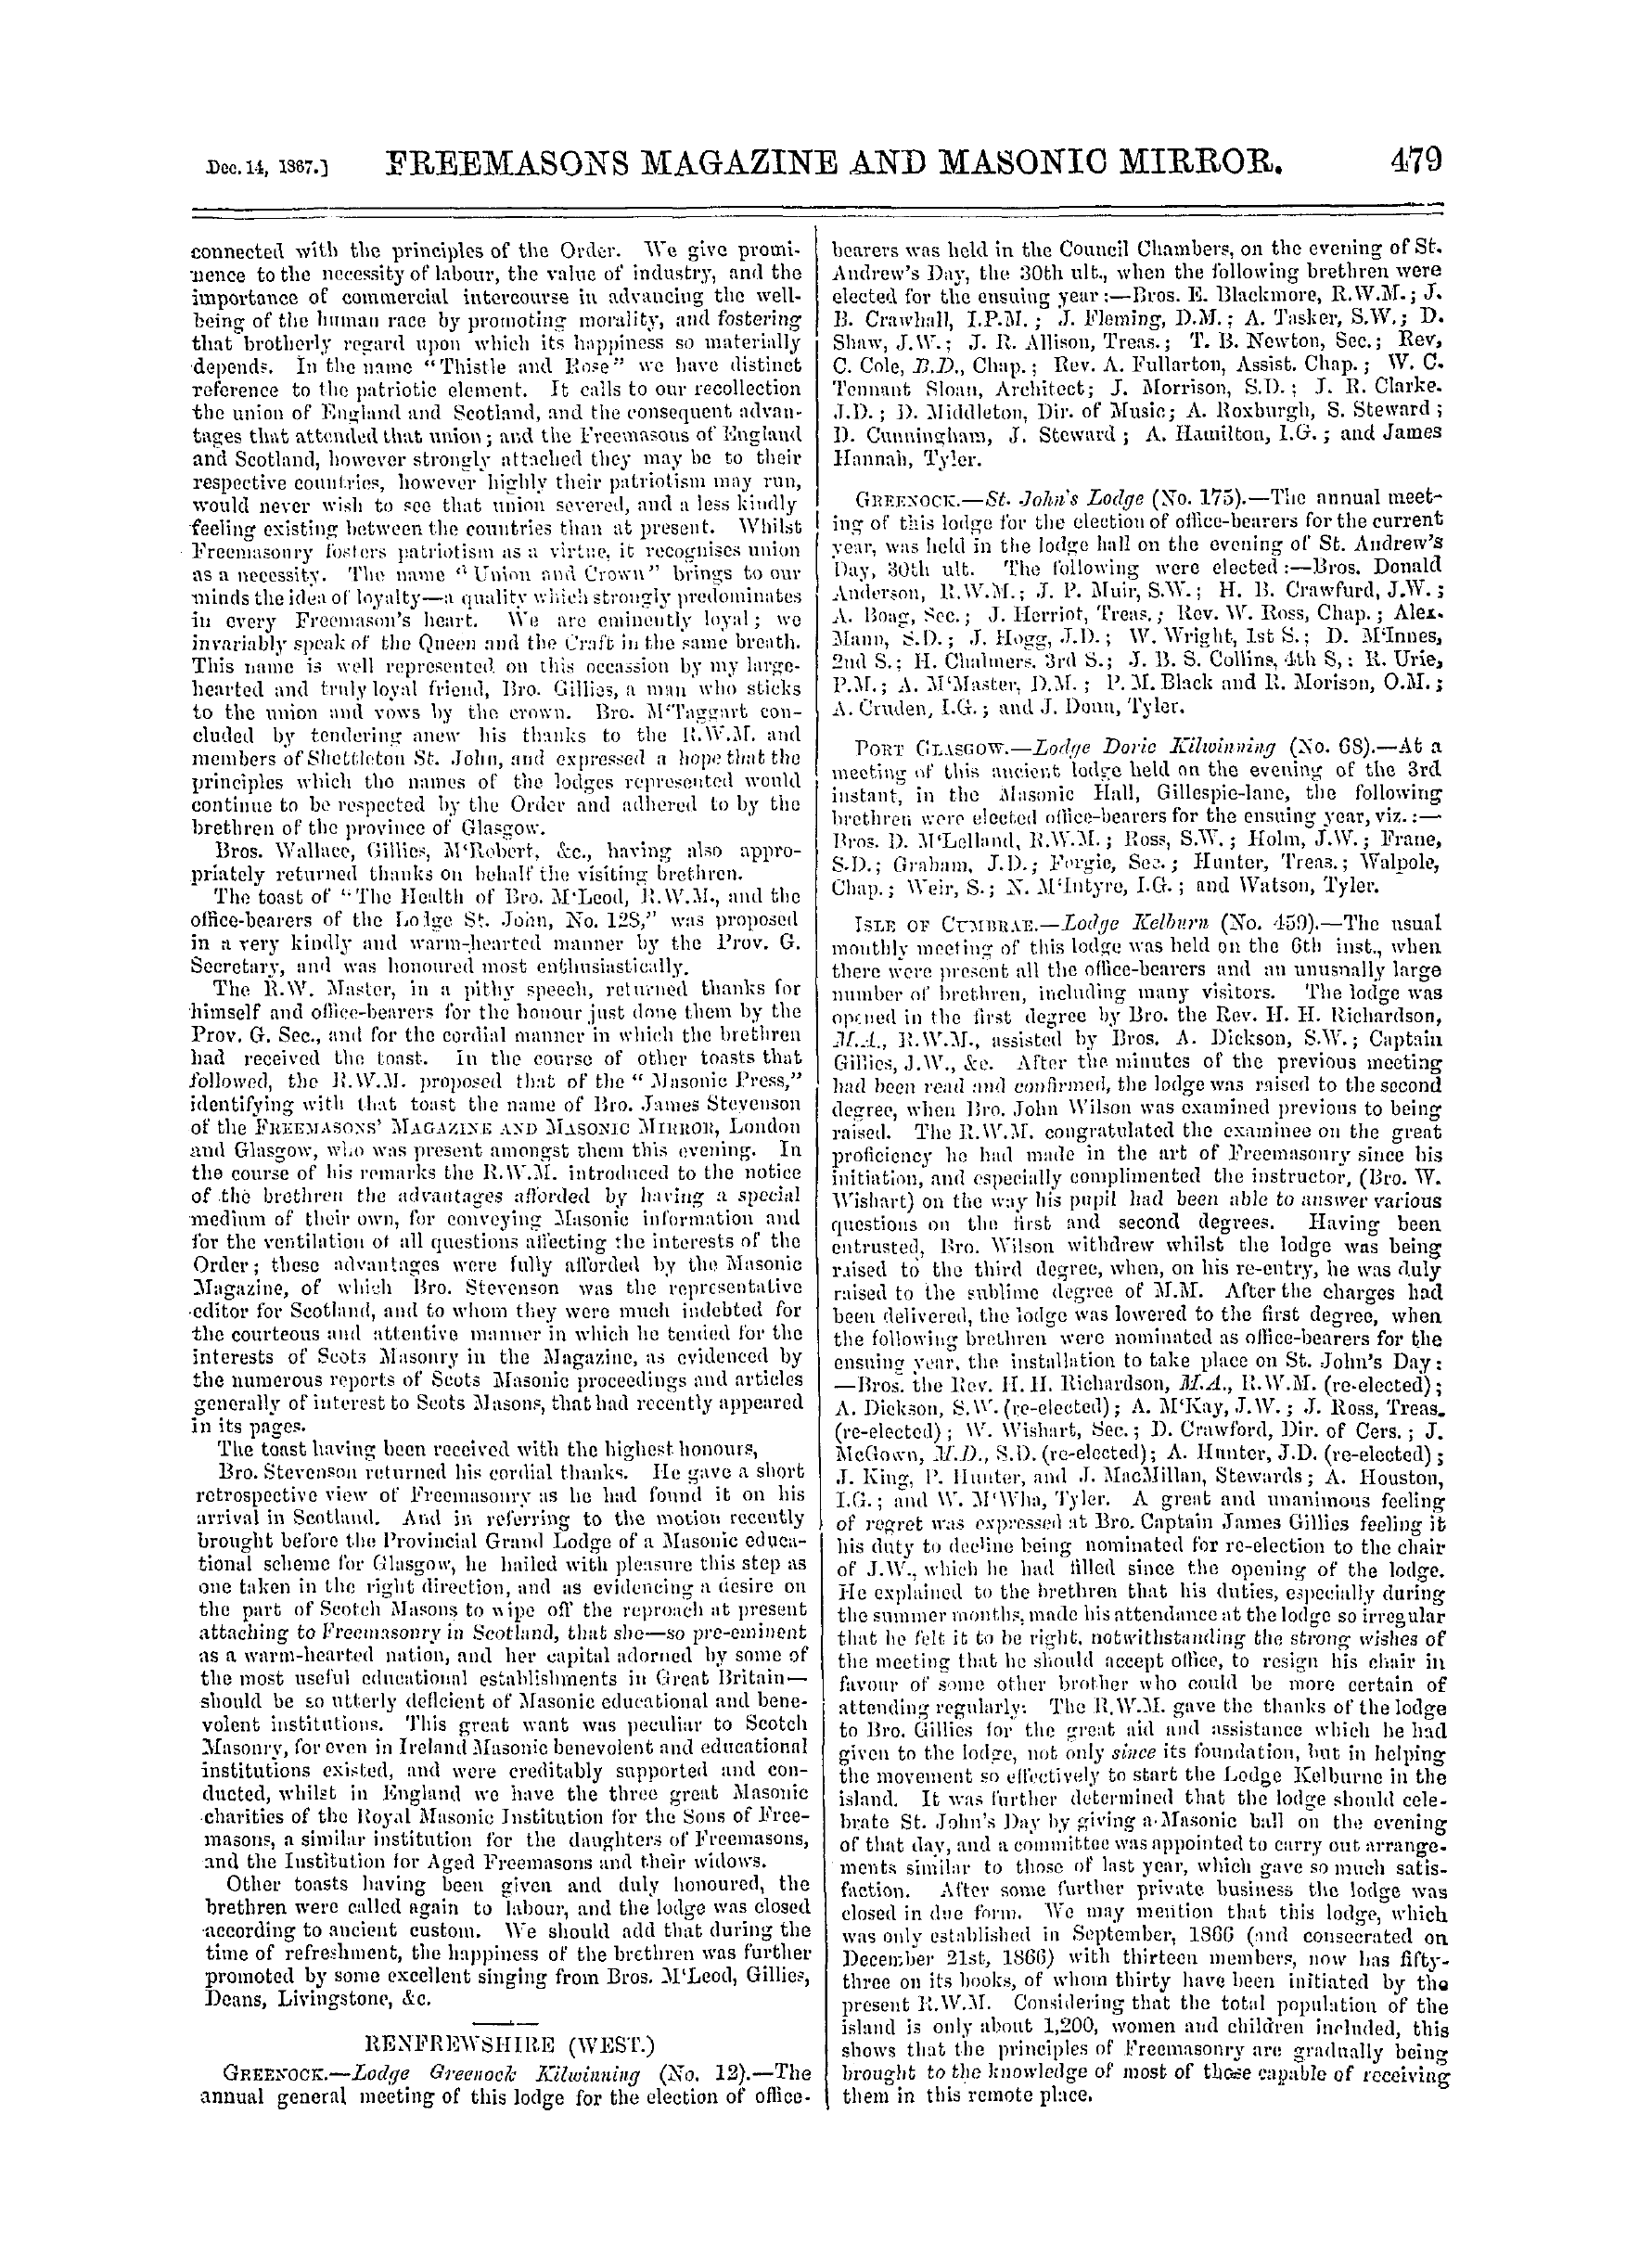 The Freemasons' Monthly Magazine: 1867-12-14 - Scotland.